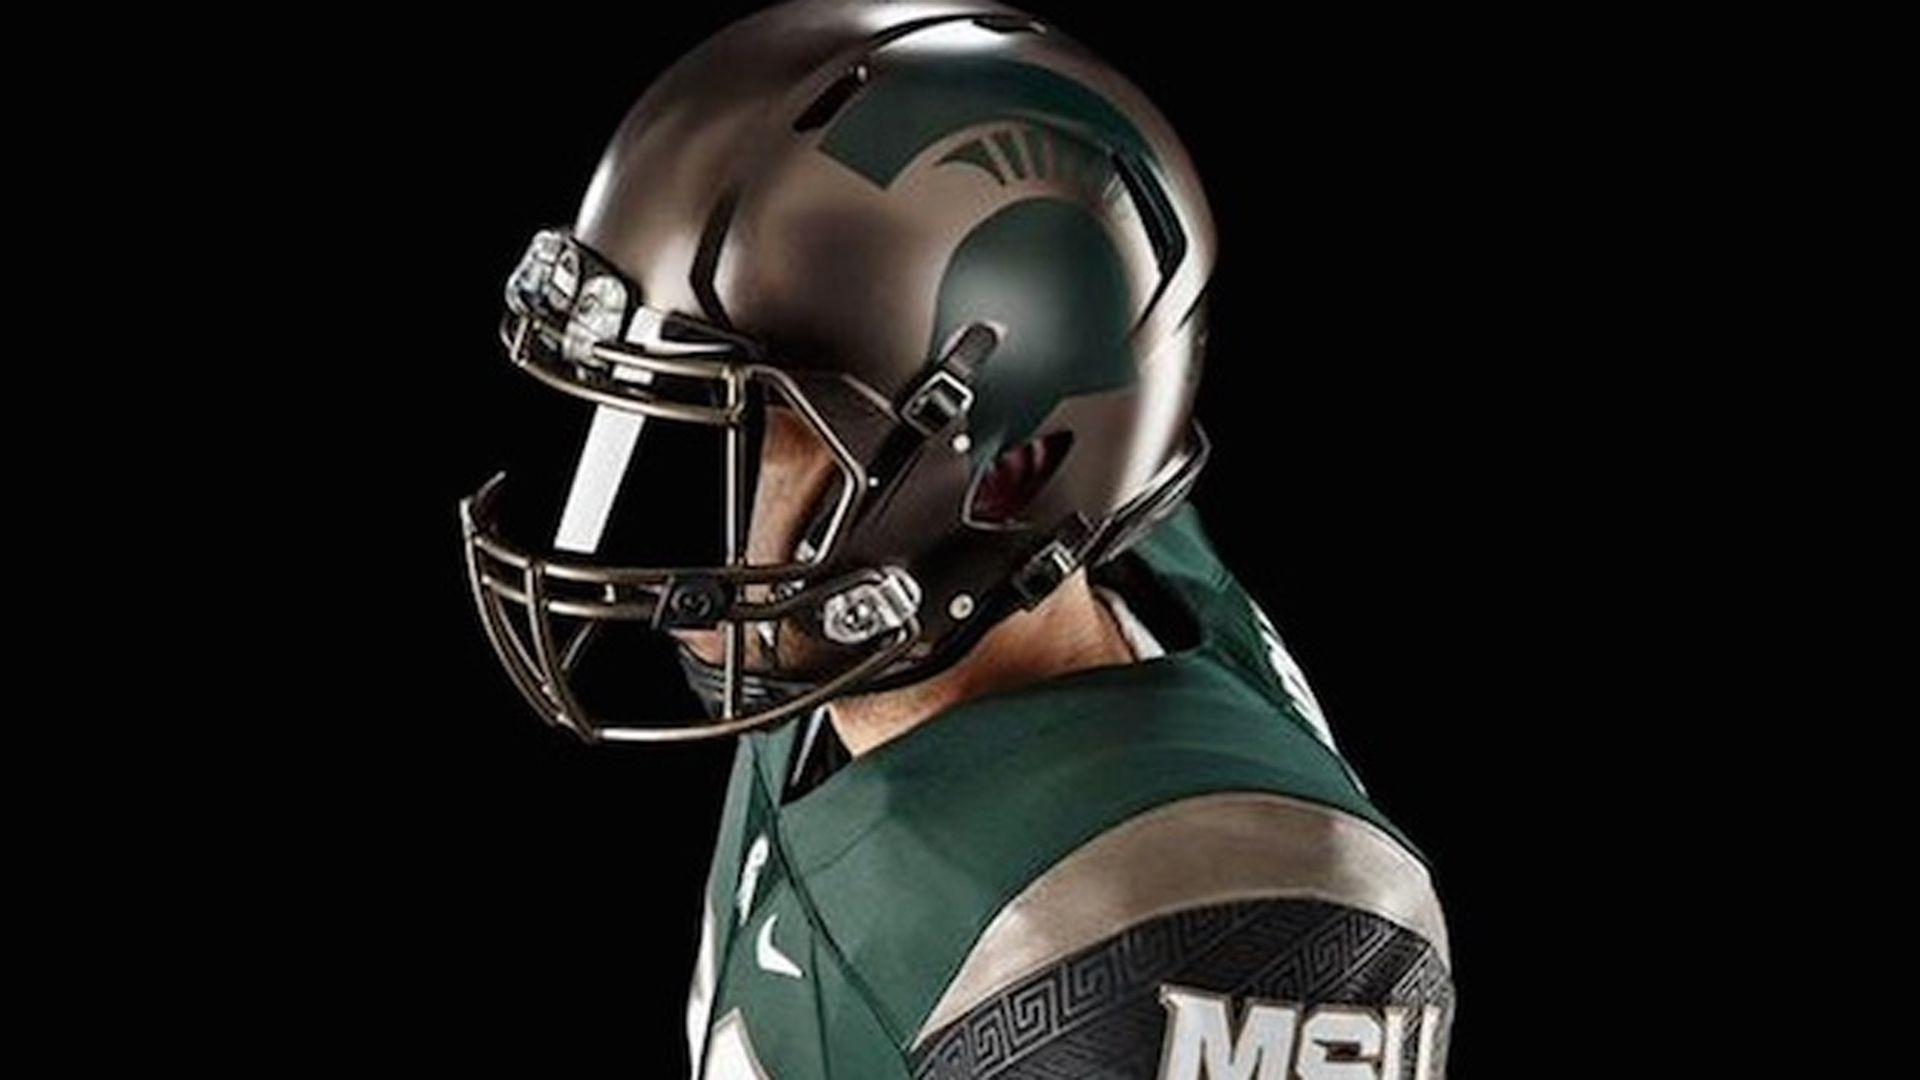 Michigan State&;s new alternate uniforms inspired